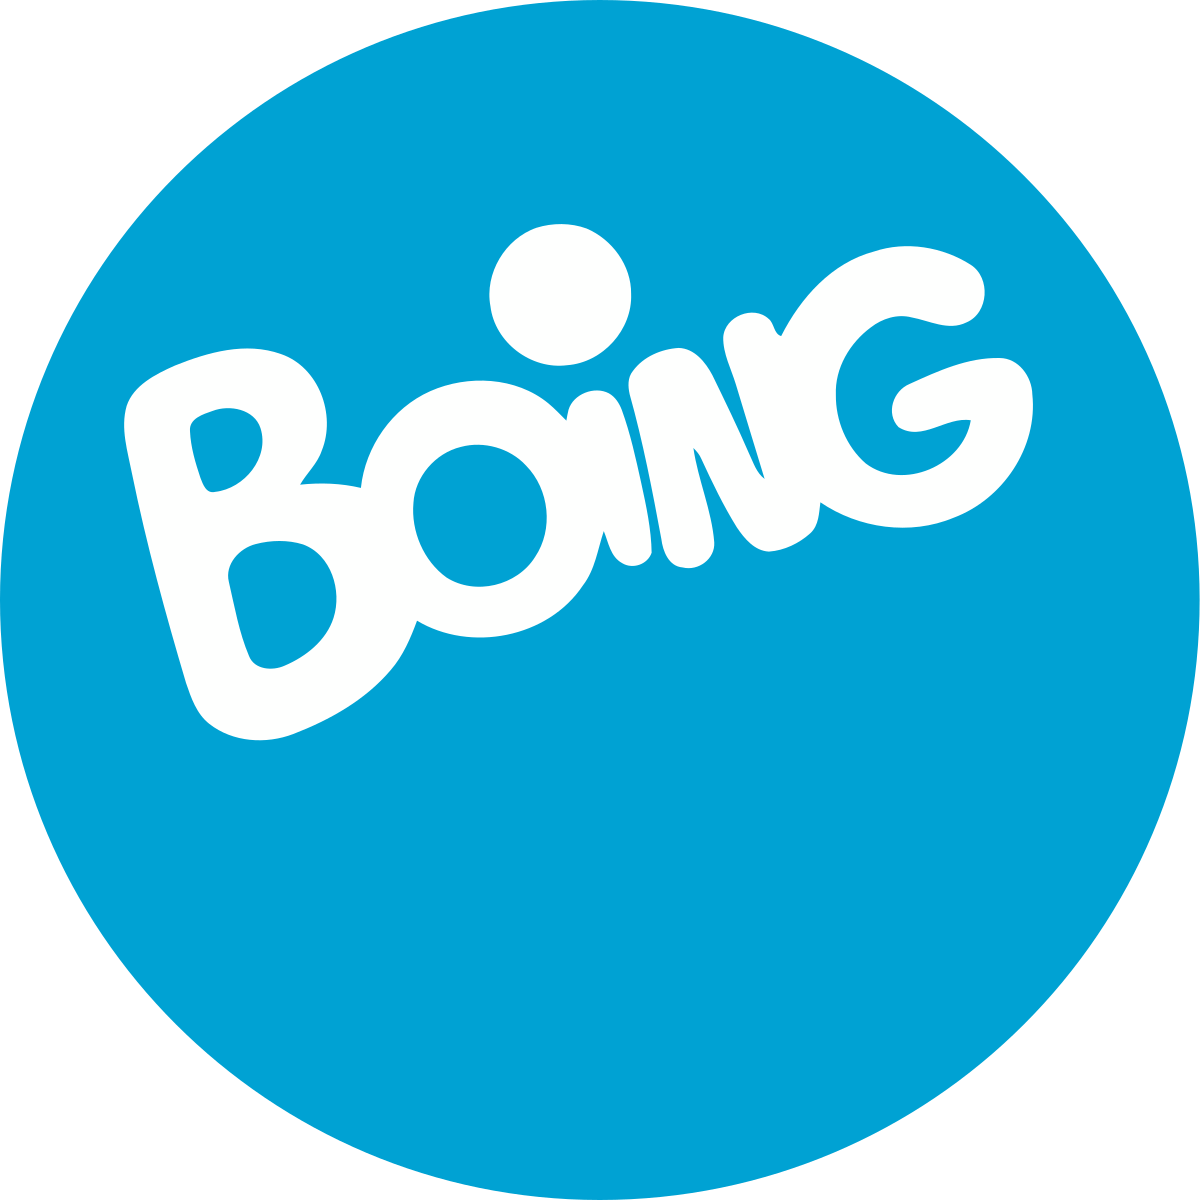 Spanish TV Channel Logo - Boing (Spanish TV channel)